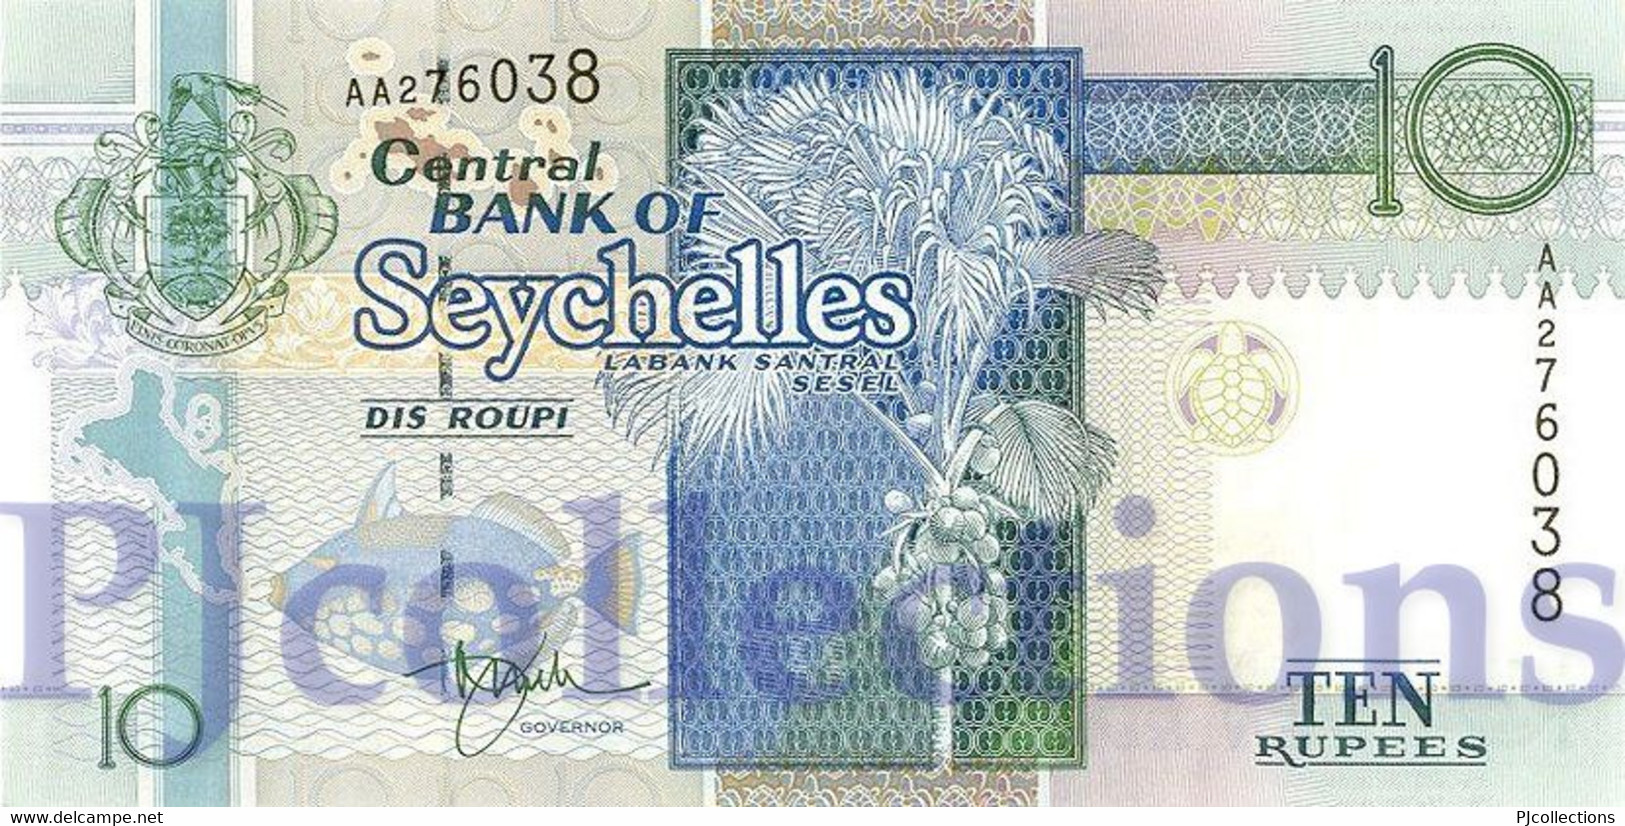 SEYCHELLES 10 RUPEES 1998 PICK 36a UNC PREFIX "AC-AD" - Seychelles